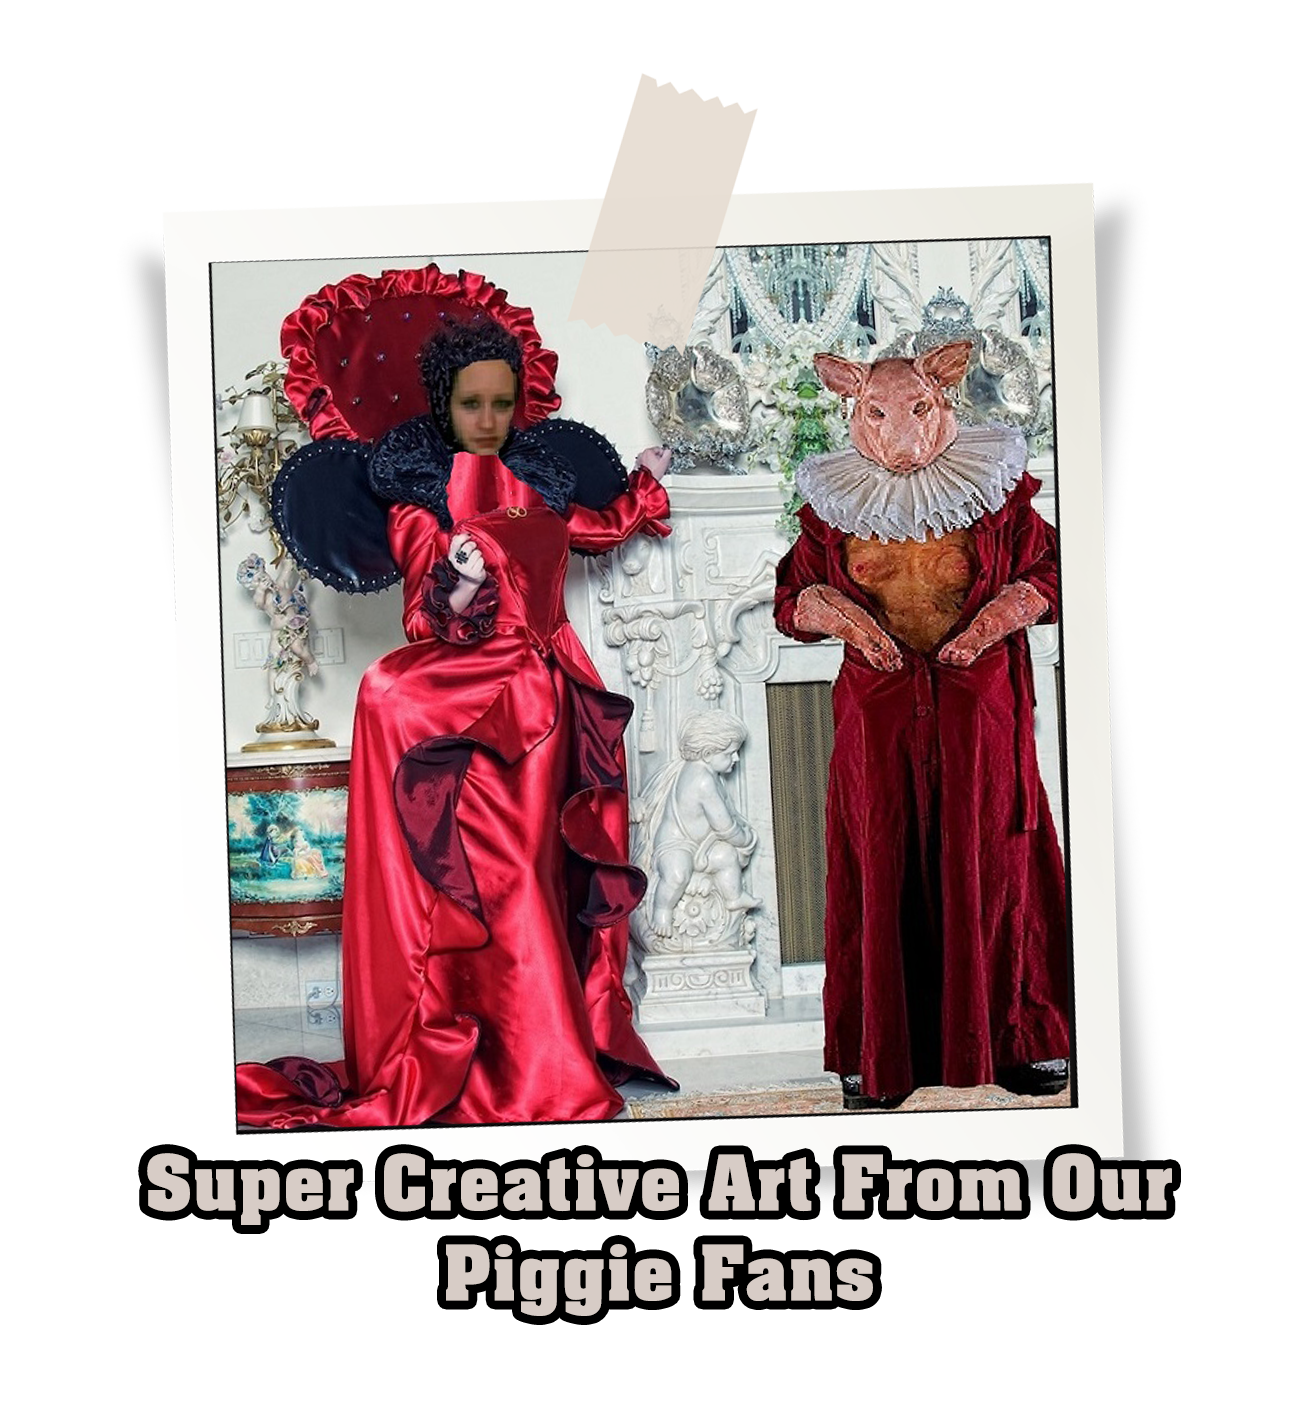 Super Creative Art From Our Piggie Fans